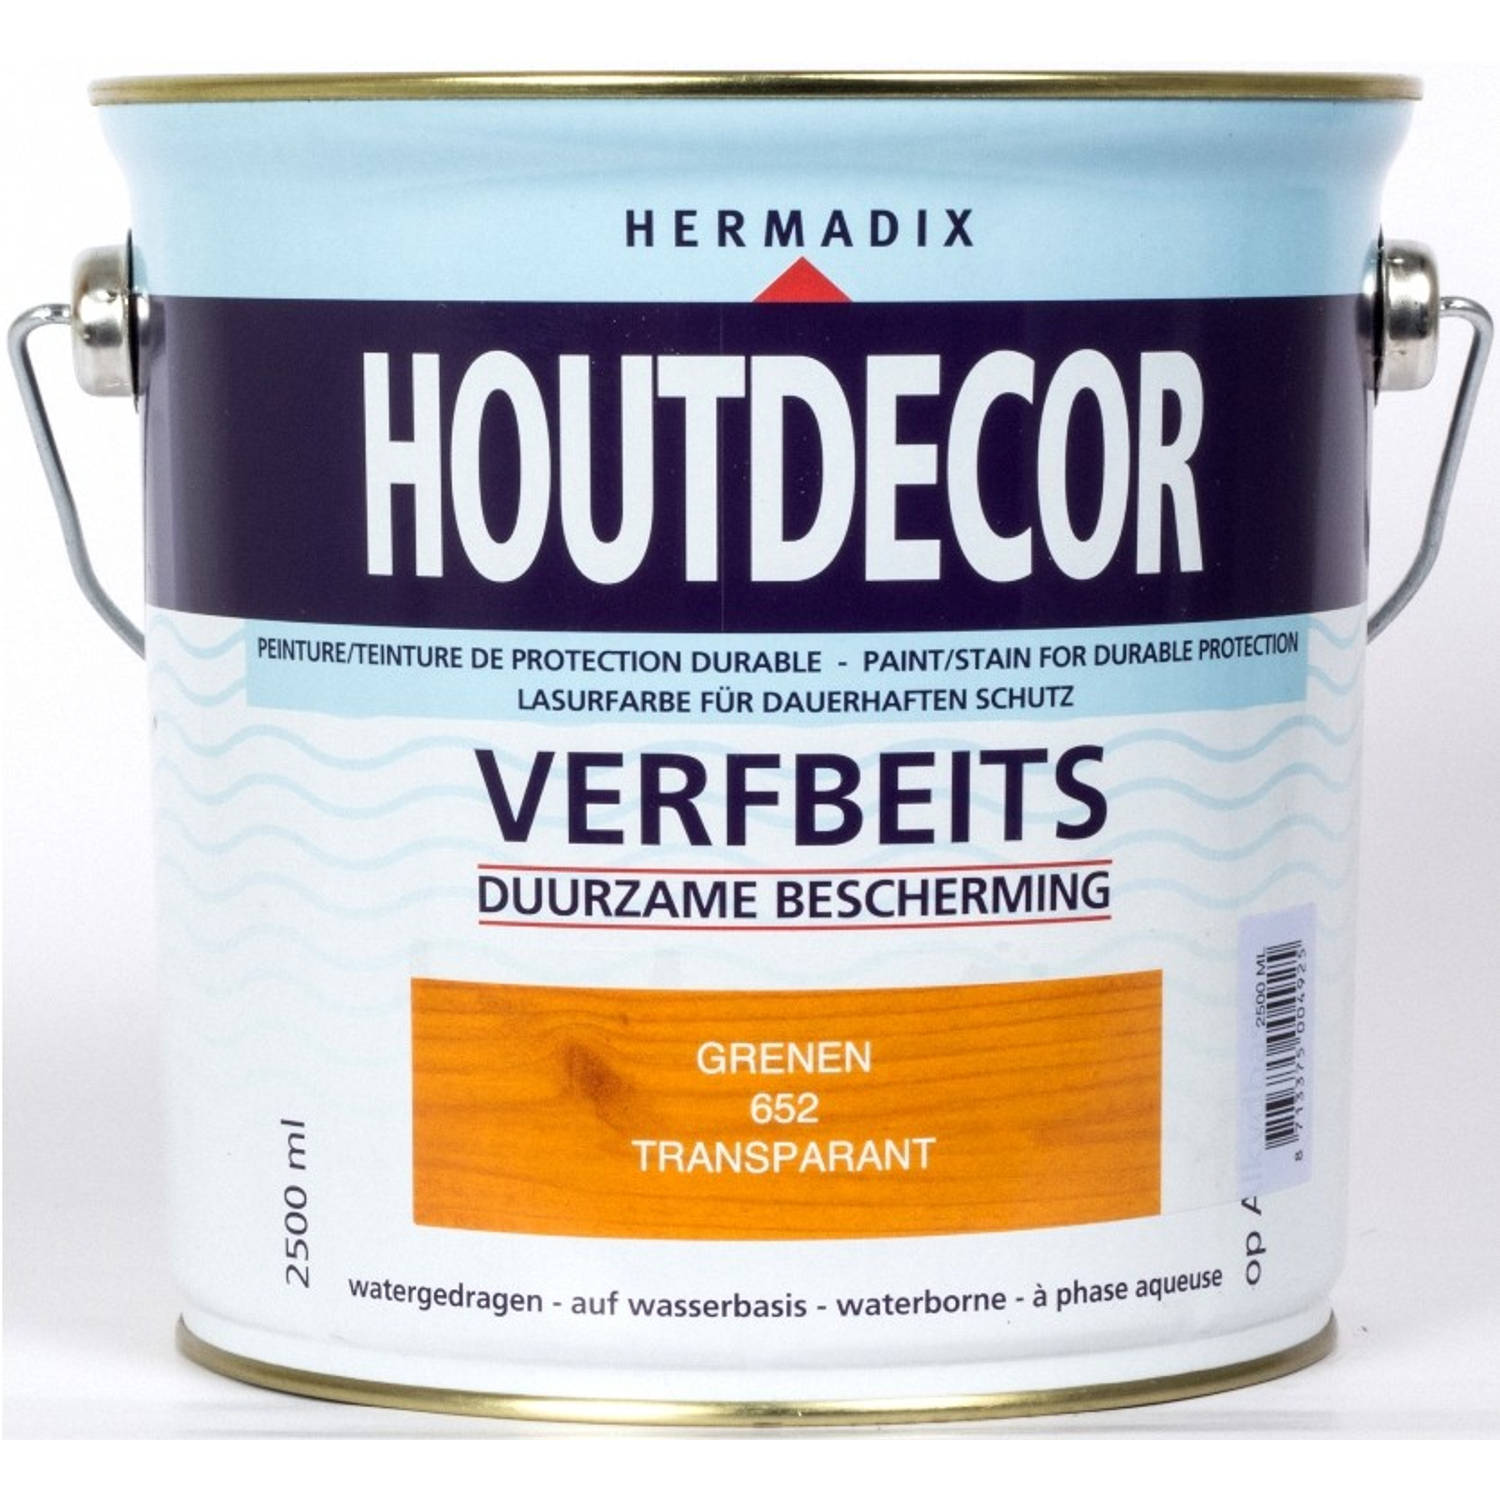 Hermadix Houtdecor Verfbeits Grenen 652 2,5 L